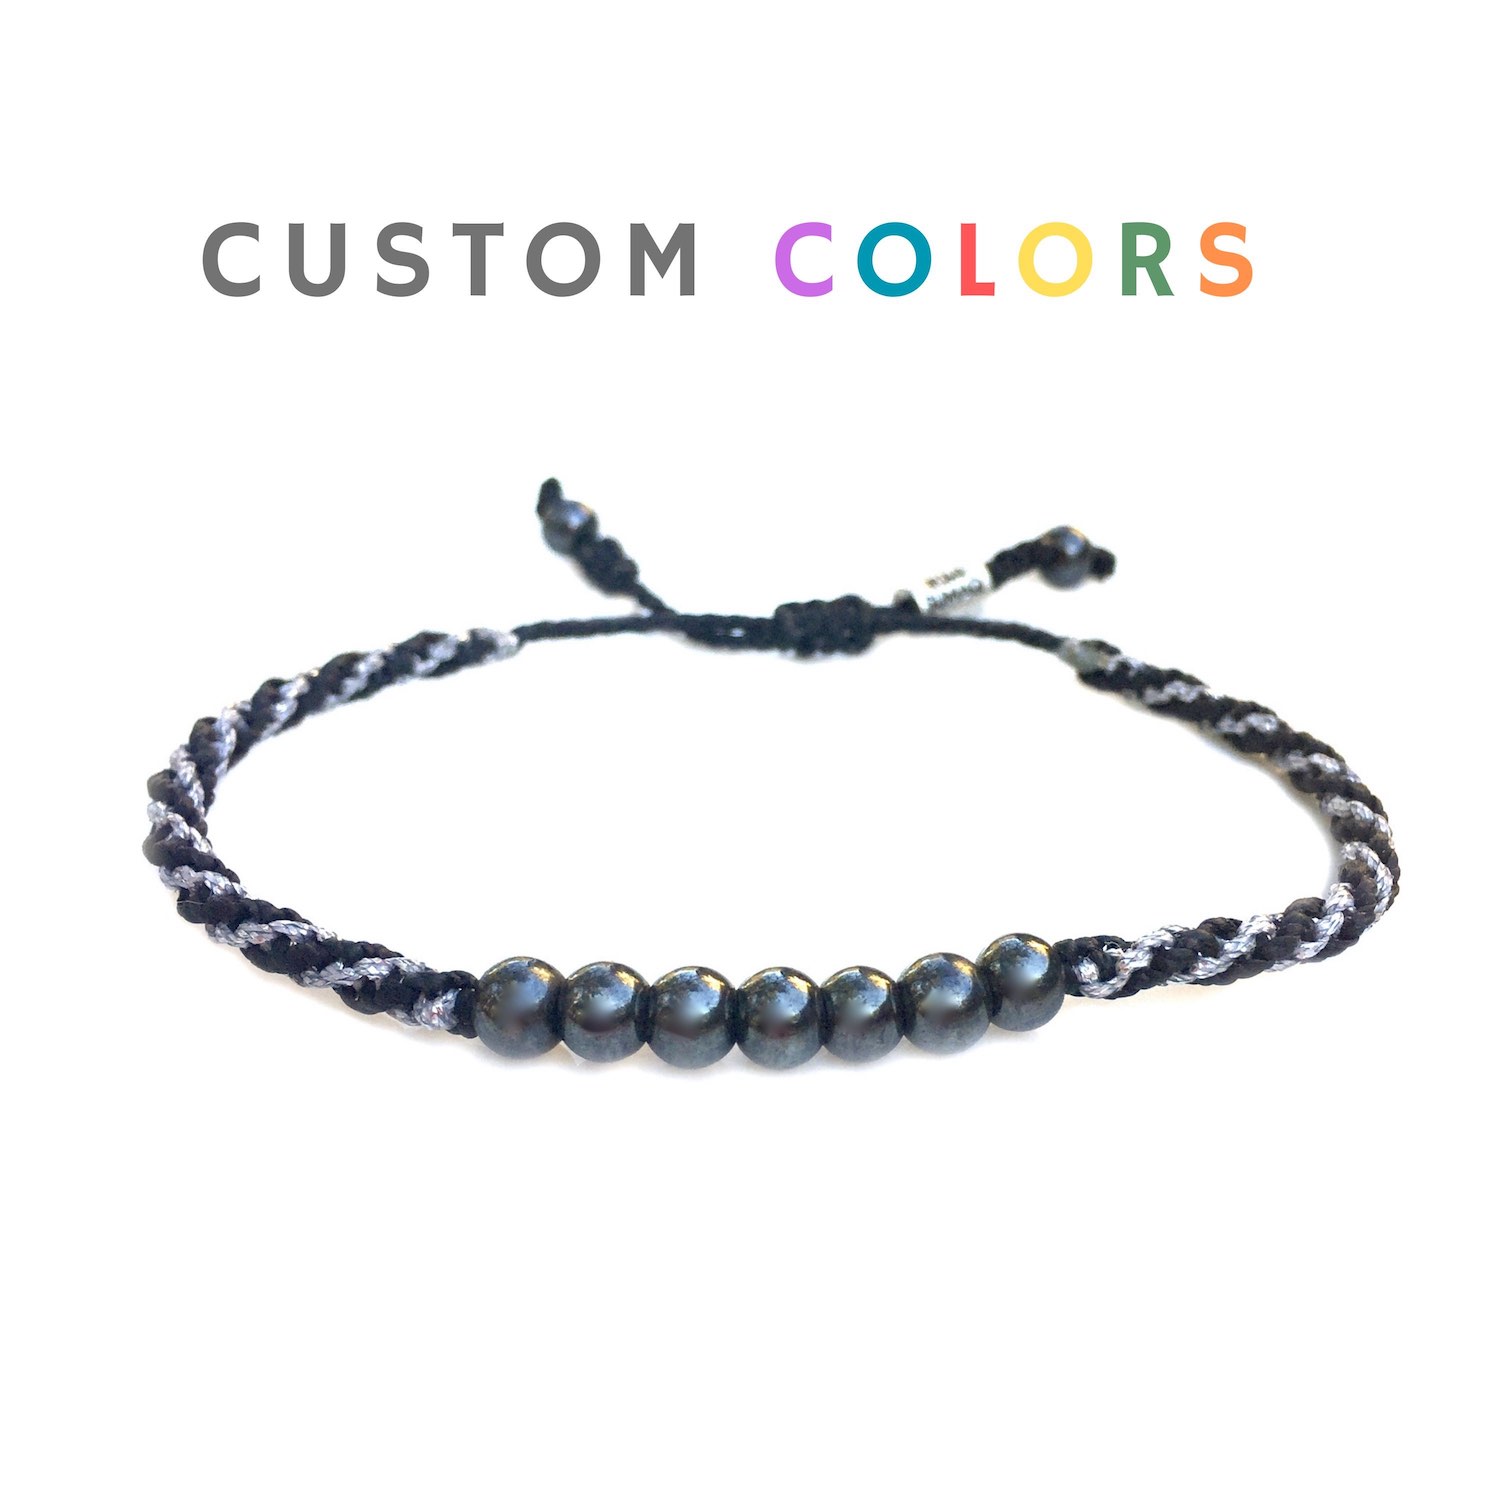 Custom Hematite rope bracelet for men, women and kids. Hand-knotted sailor rope bracelet with beaded Hematite stones handmade by Rumi Sumaq.